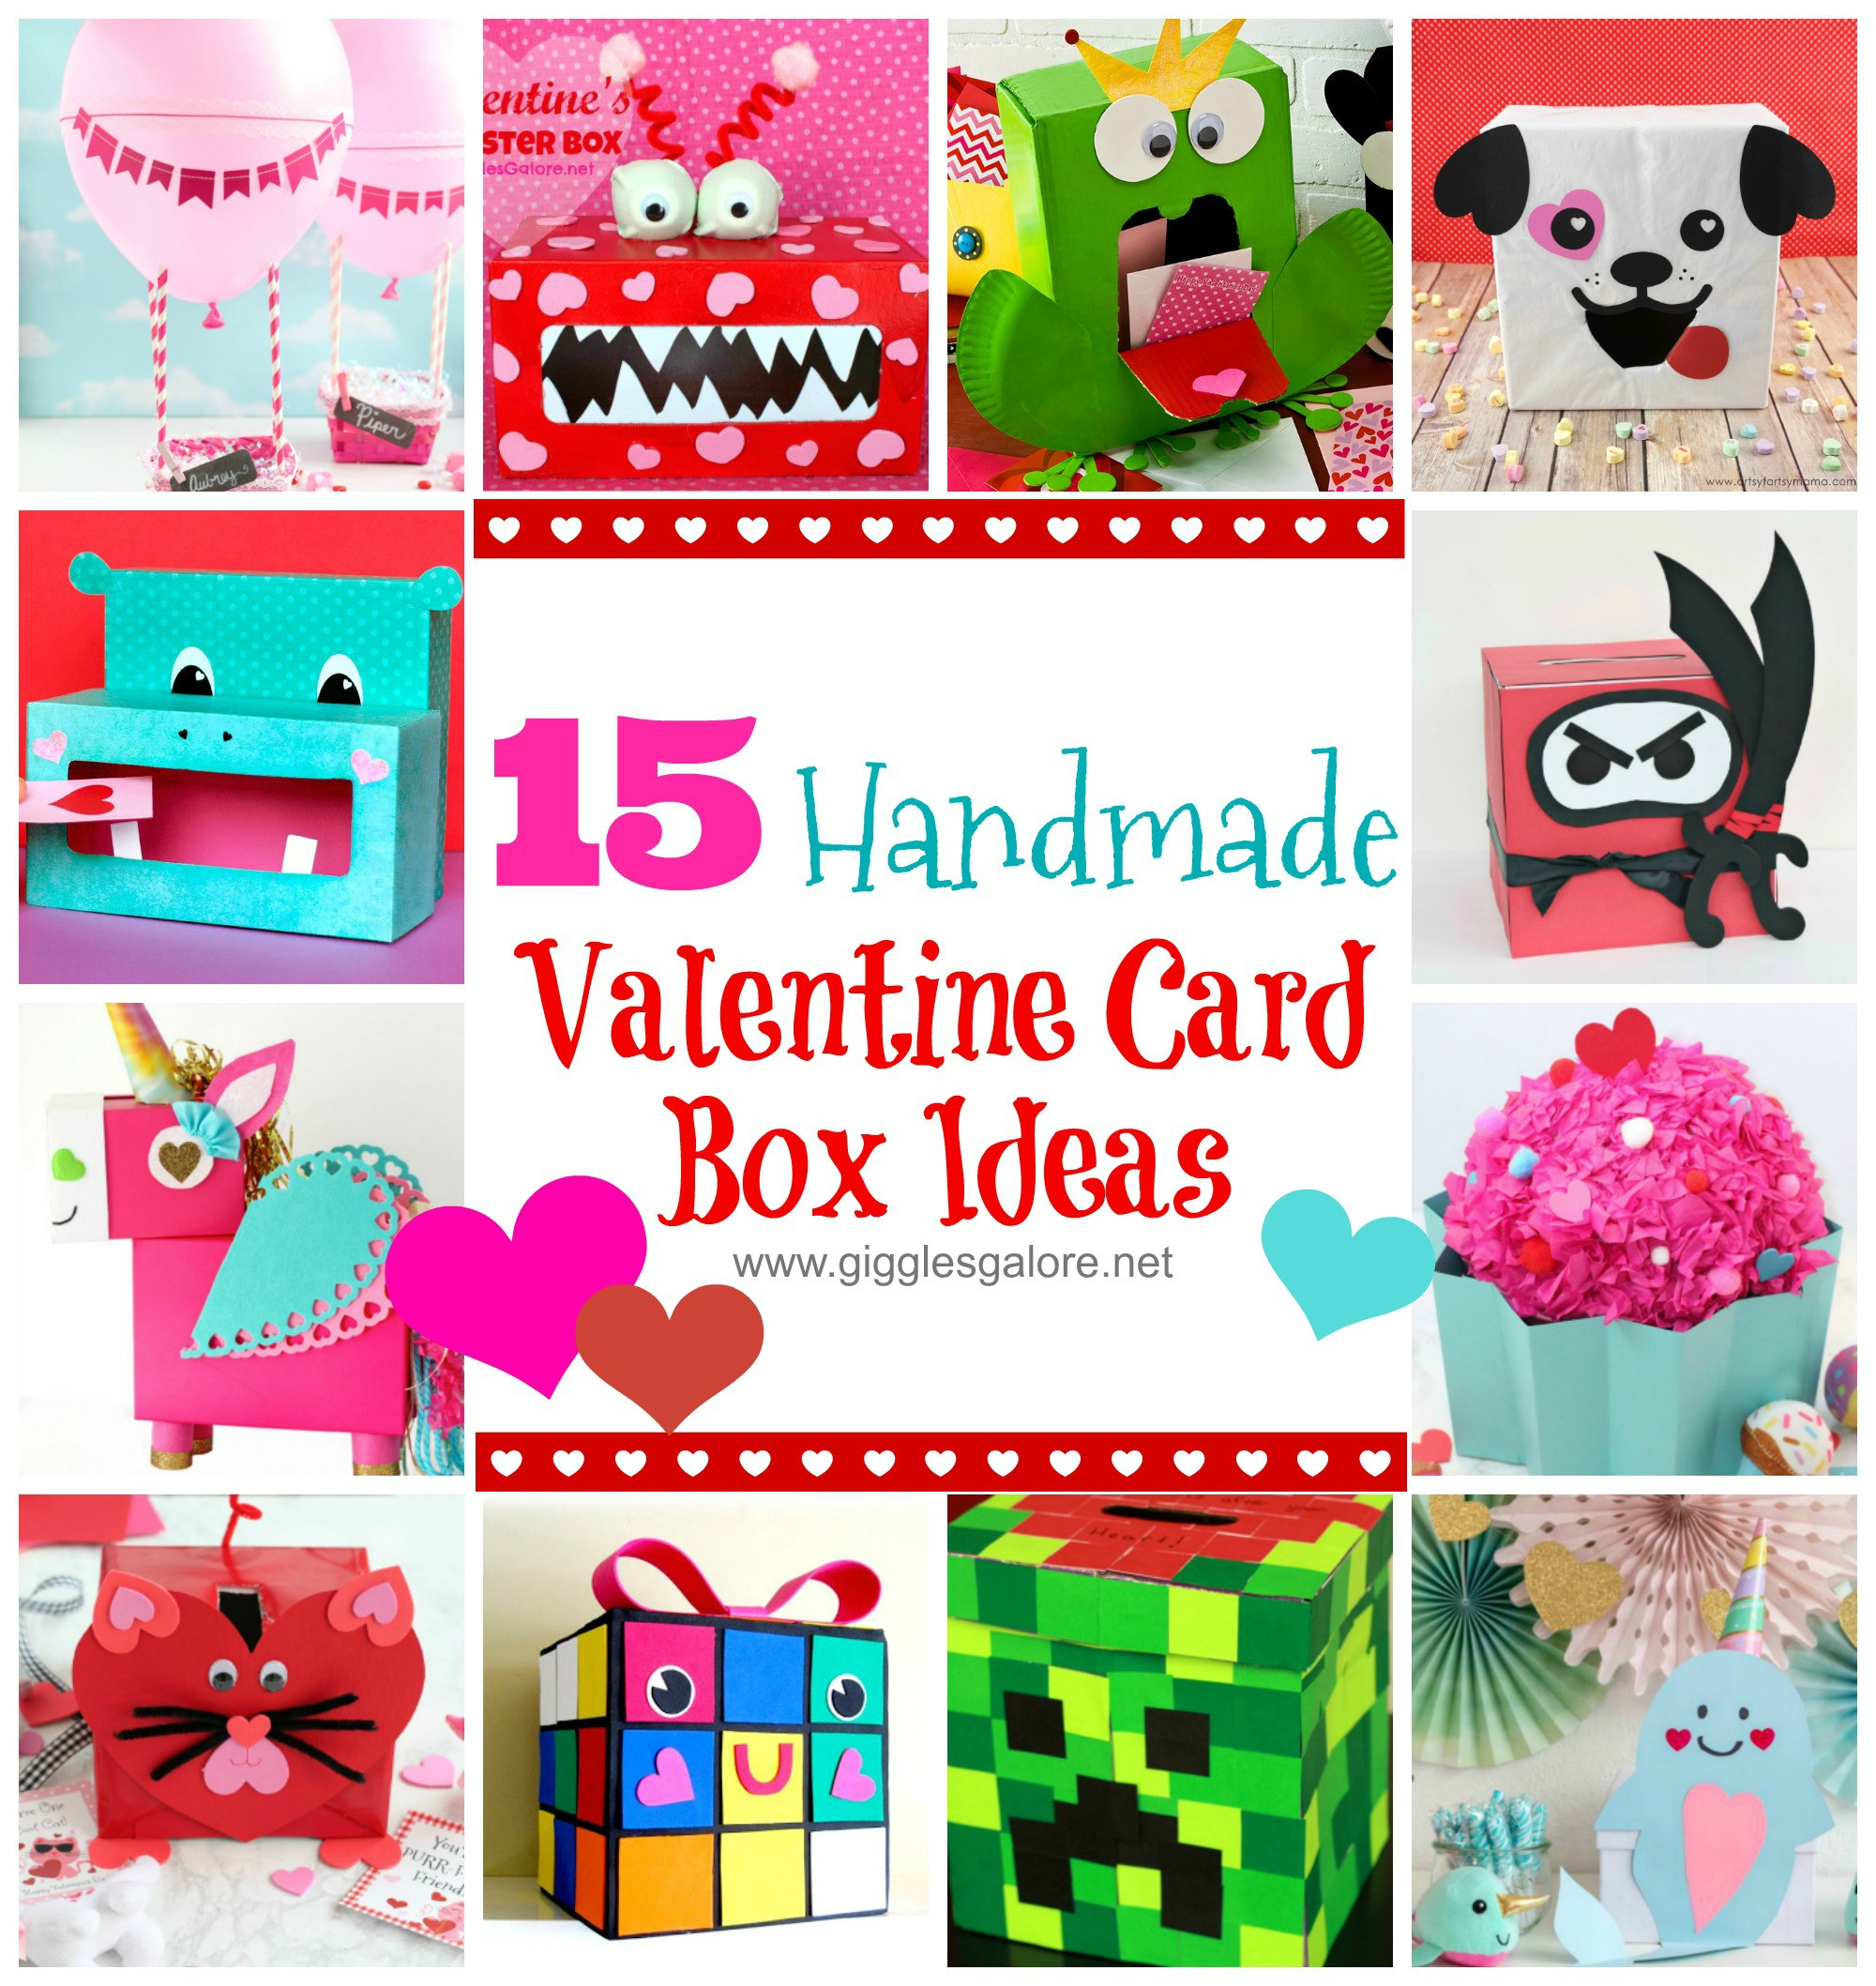 Valentine Gift Ideas For School
 15 Handmade Valentine Box Ideas for School Giggles Galore